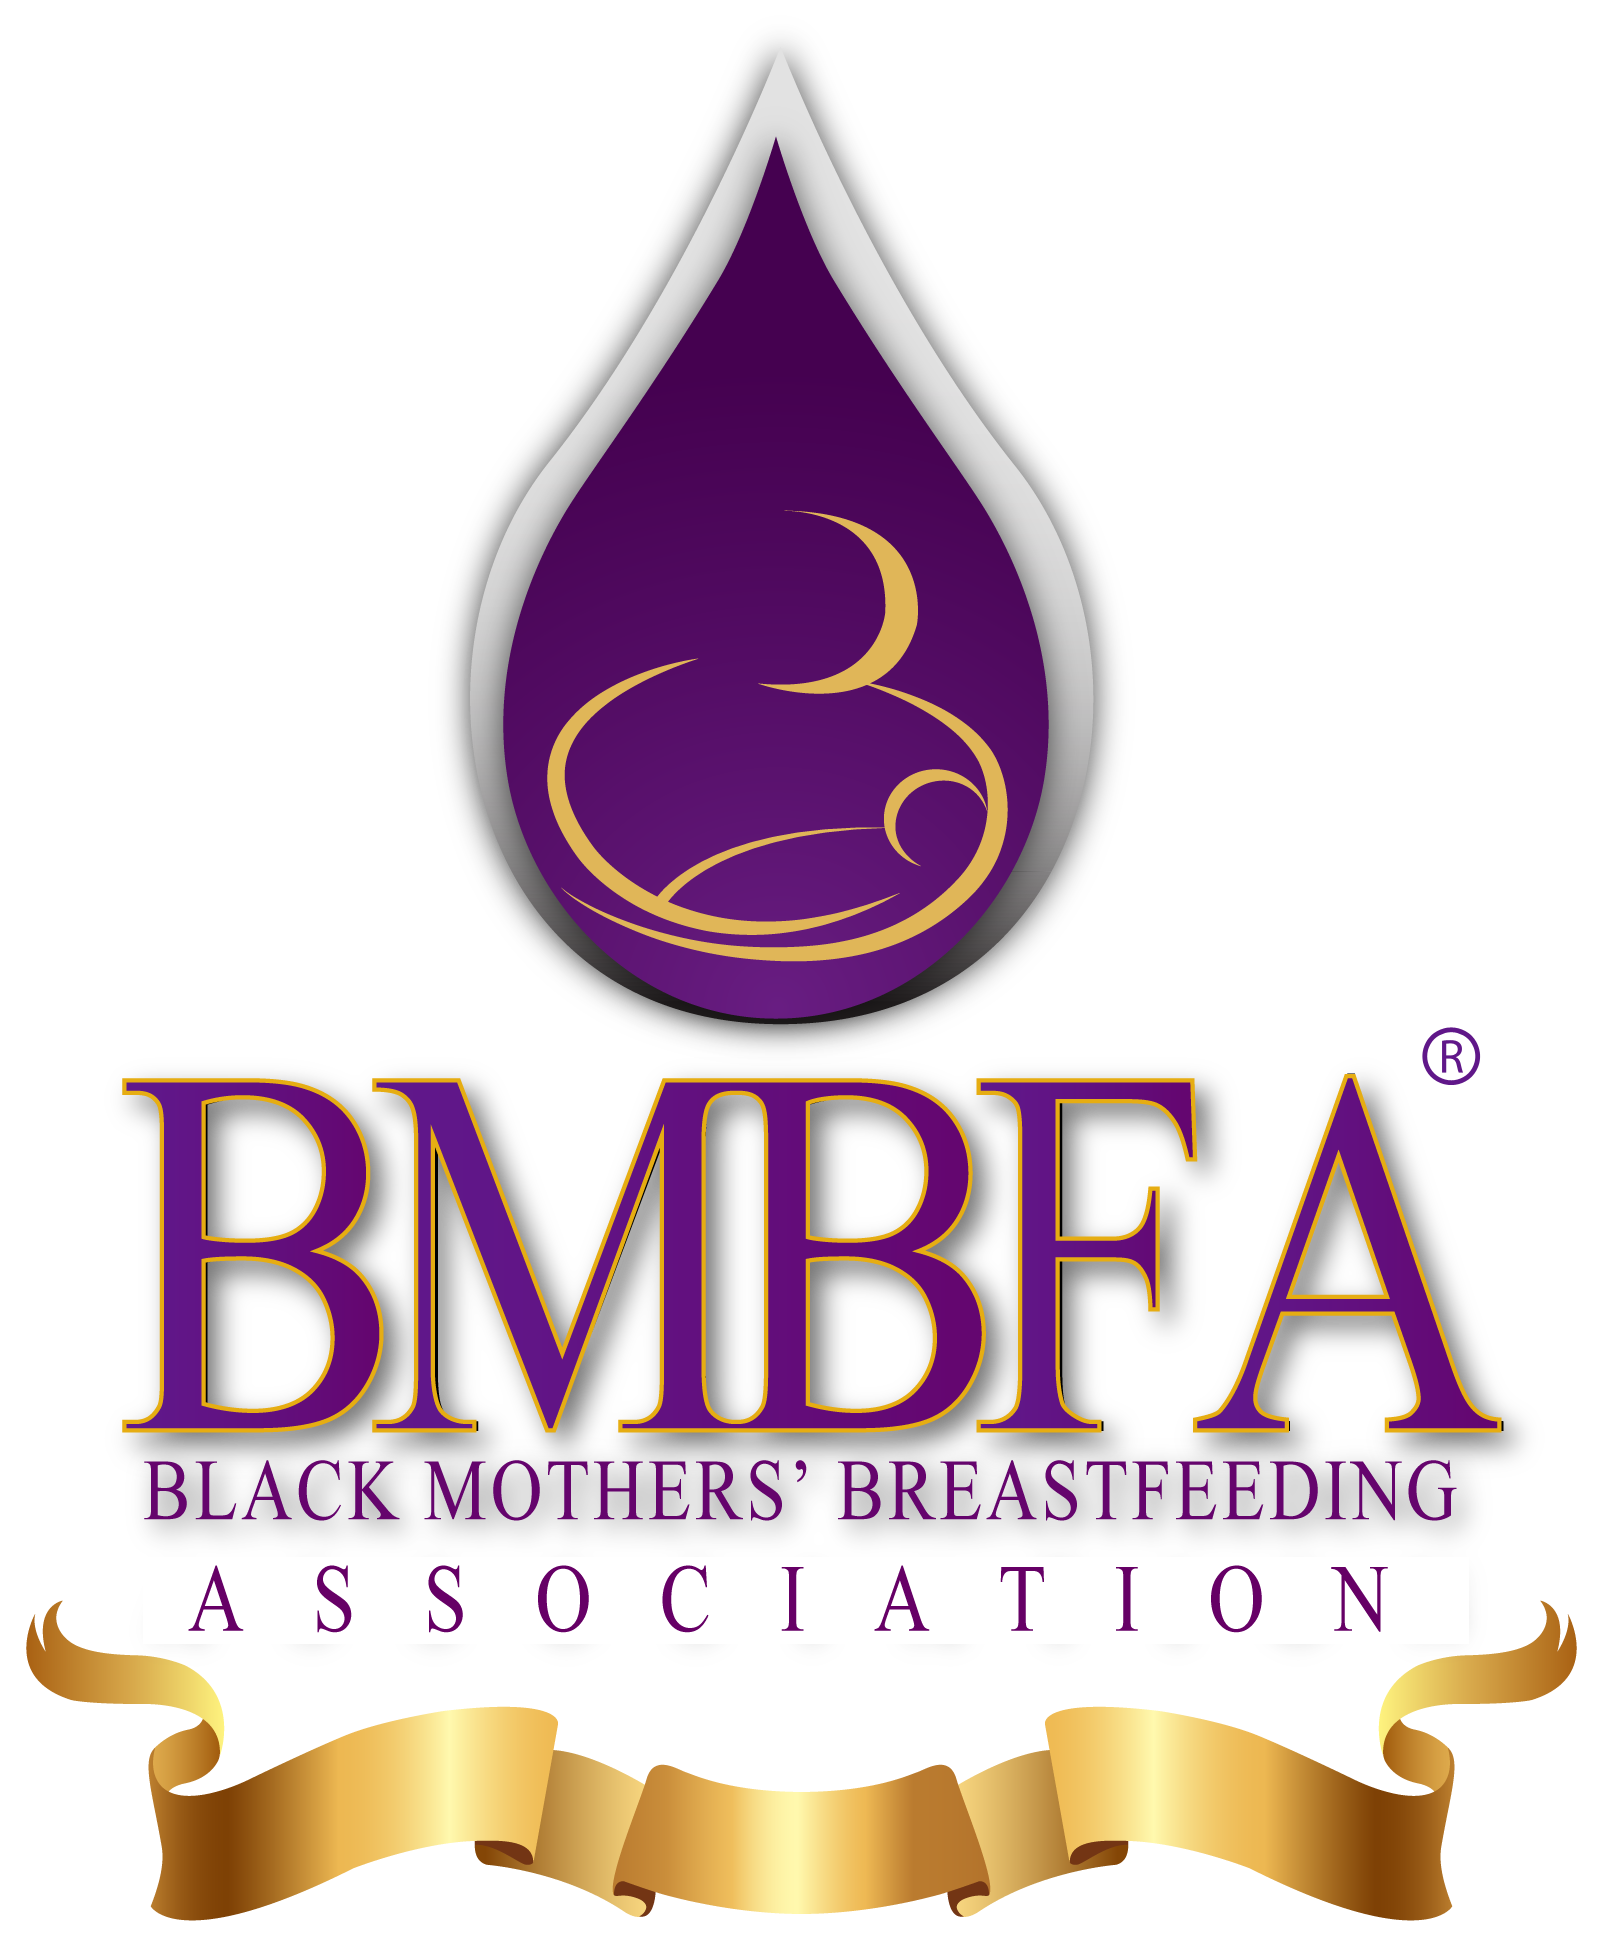 Black Mothers Breastfeeding Association logo